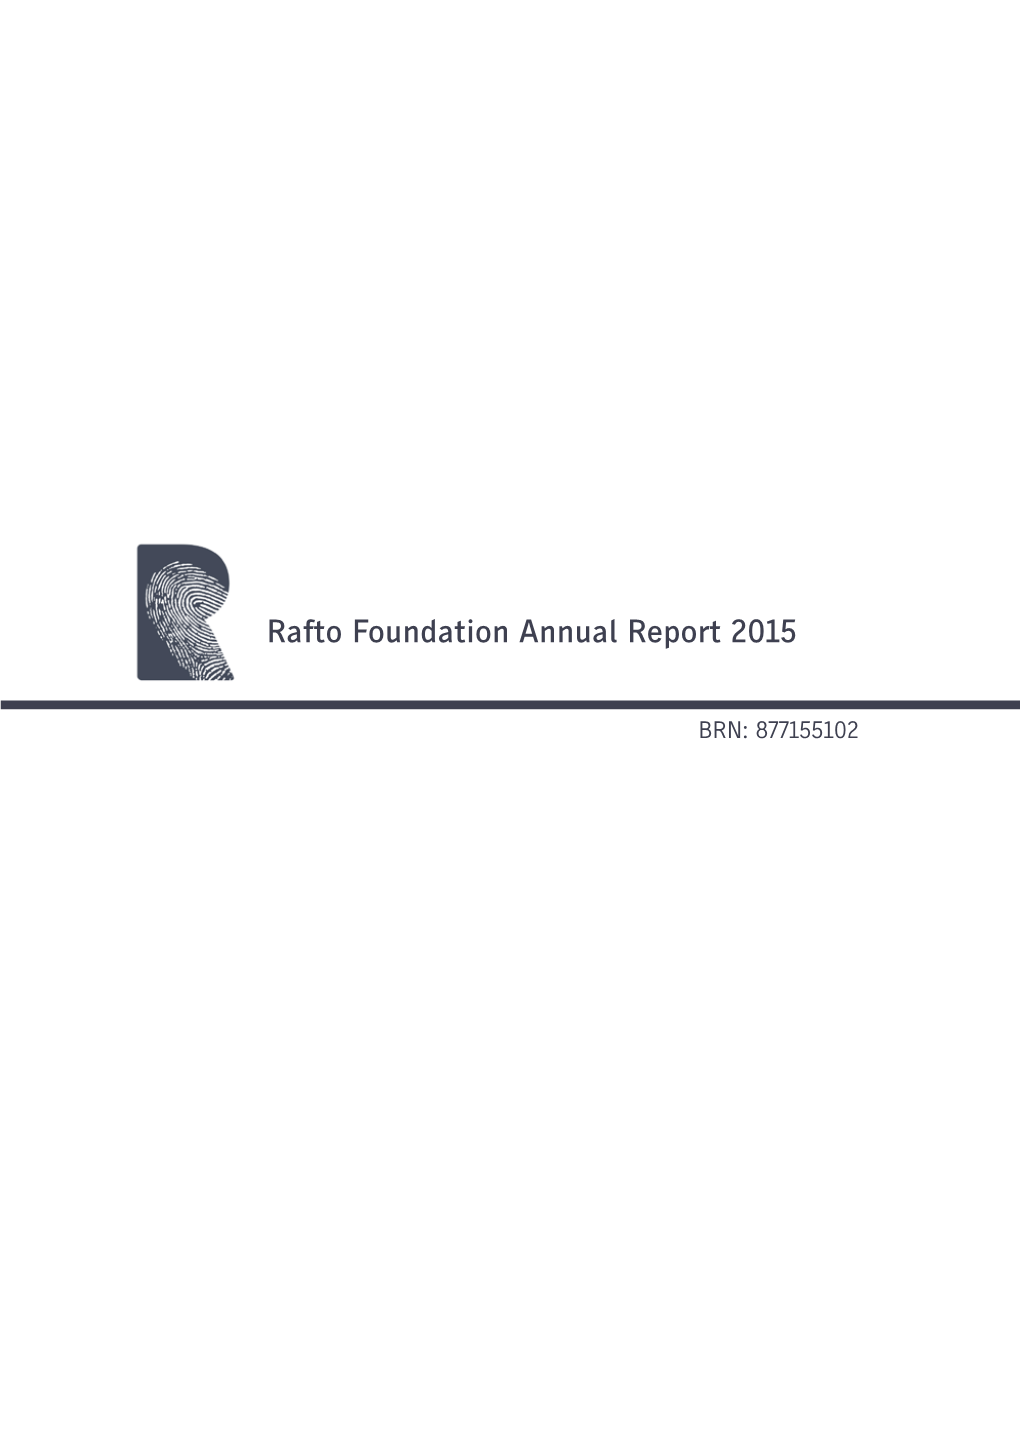 The Rafto Foundation Annual Report 2015